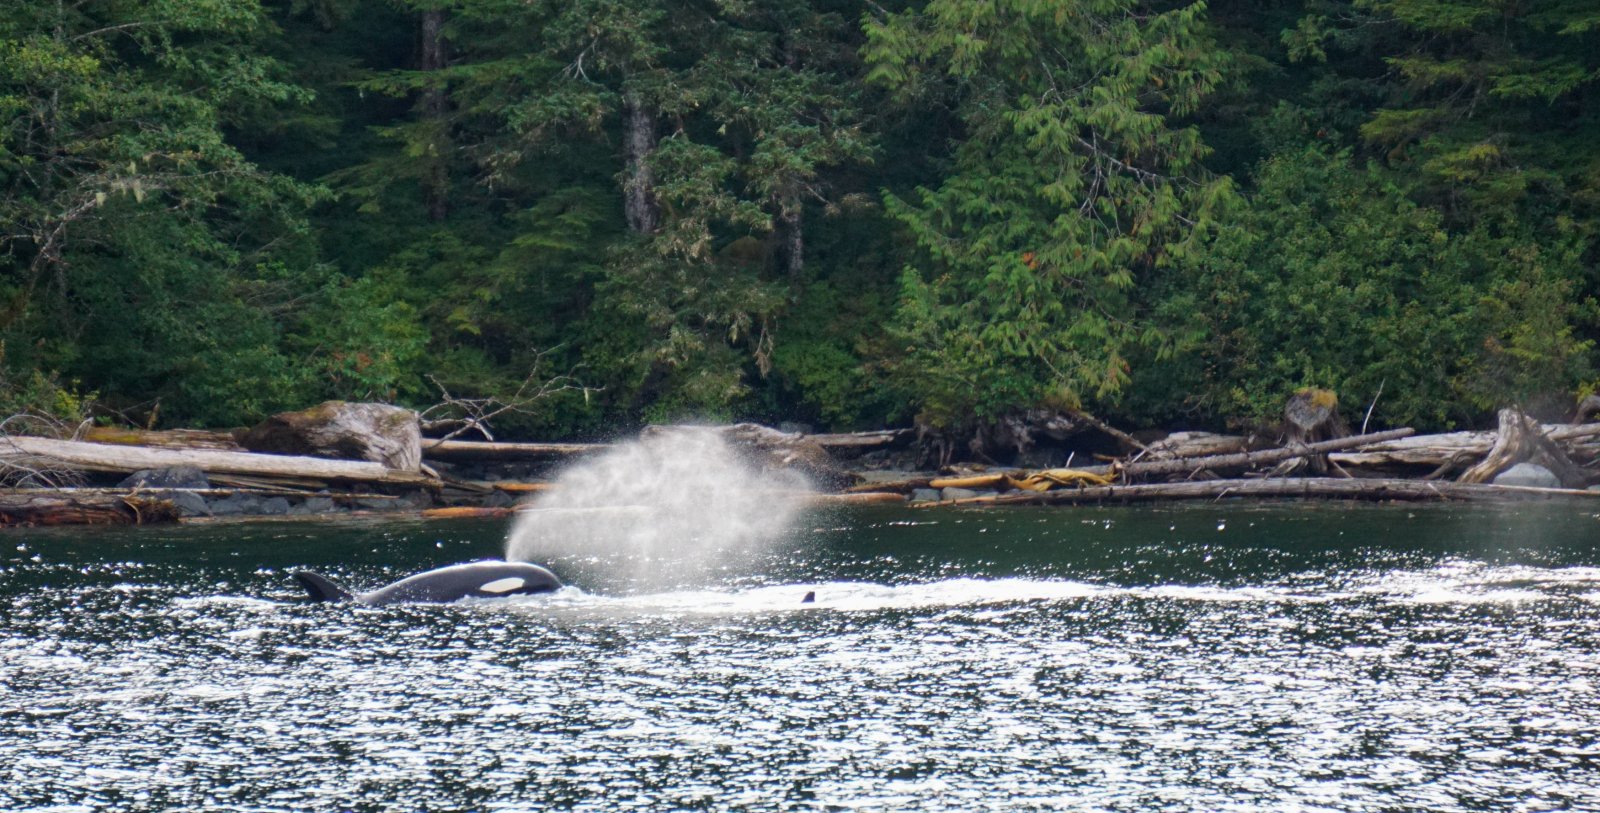 orca, killer whale, Southern Resident Killer whale, Great Bear Rainforest